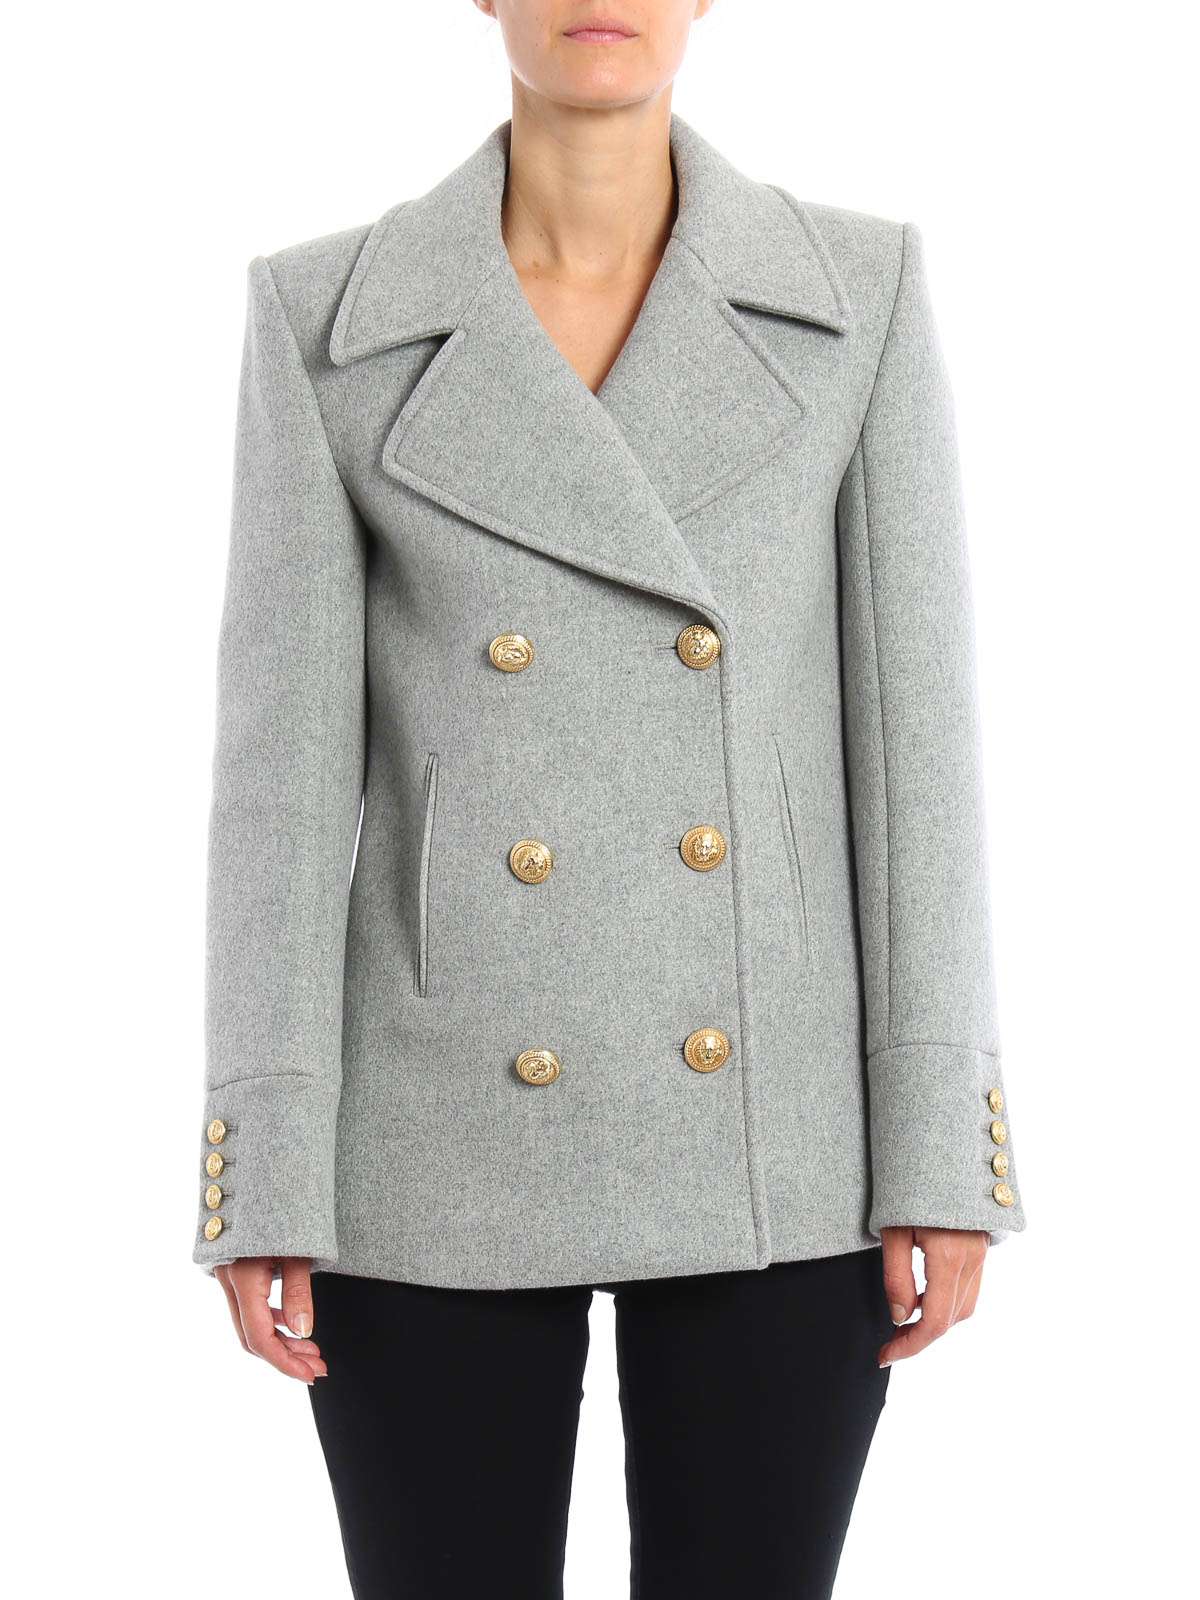 Catastrofaal systeem titel Casual jackets Balmain - Wool and cashmere blazer jacket - 2225235NC4525